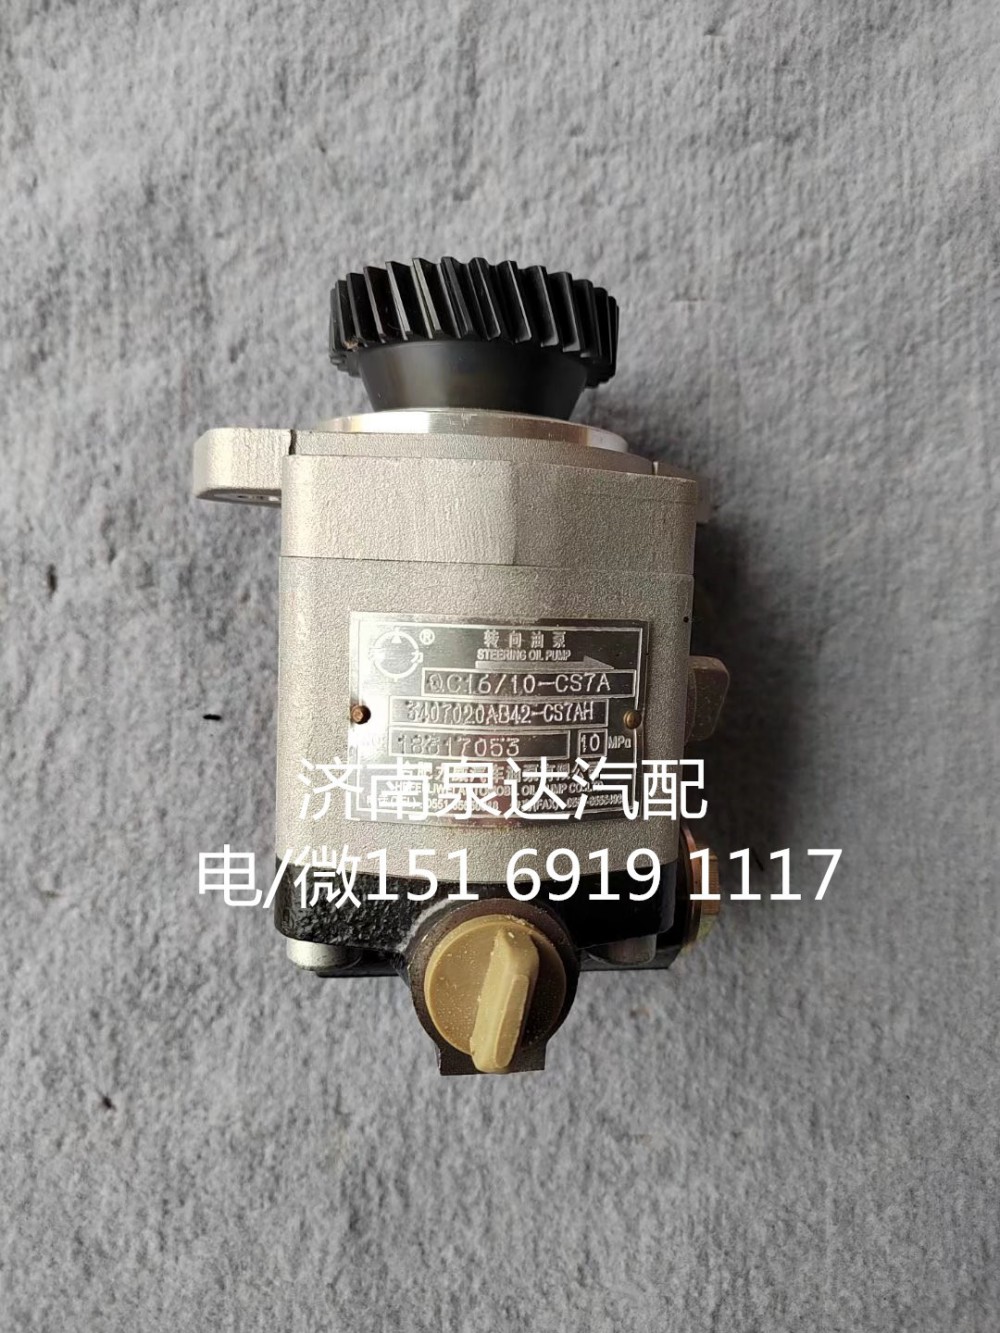 QC16/10-CS7A,齿轮泵,济南泉达汽配有限公司